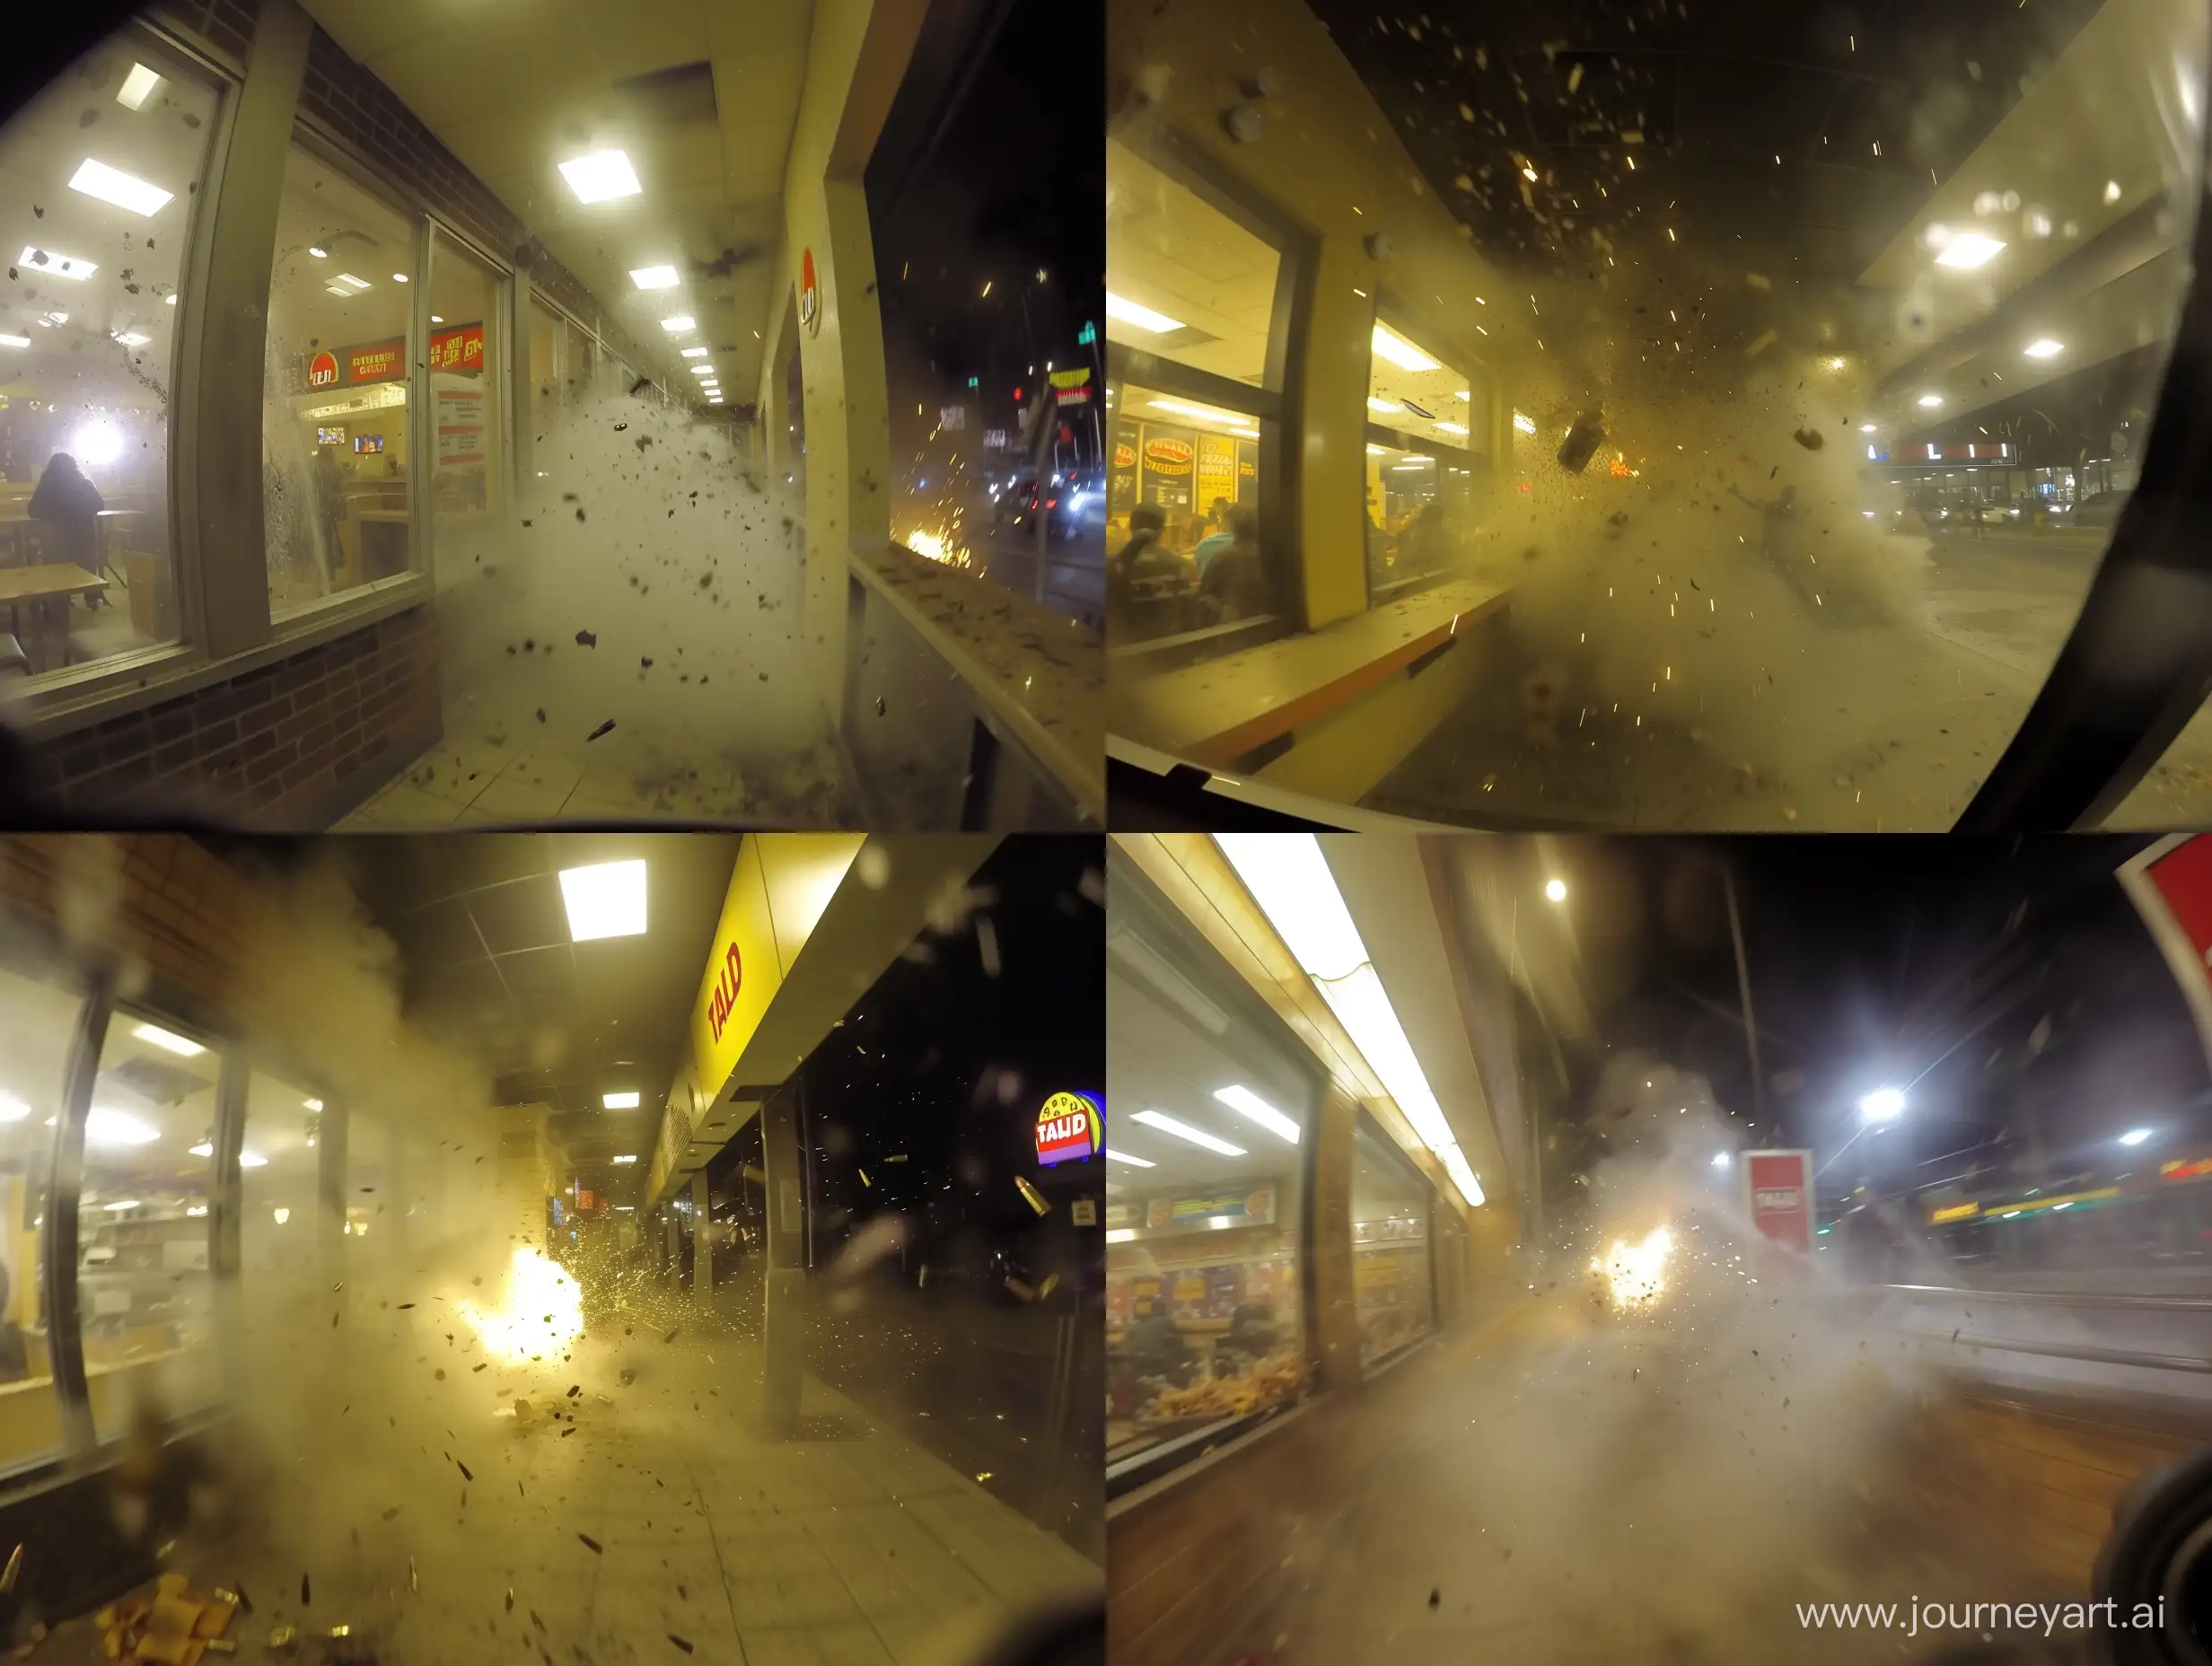 gopro footage of a gunfight inside a taco bell restaurant, pov, running, fighting, night, blurry, shaky, muzzle flash, smoke, debris